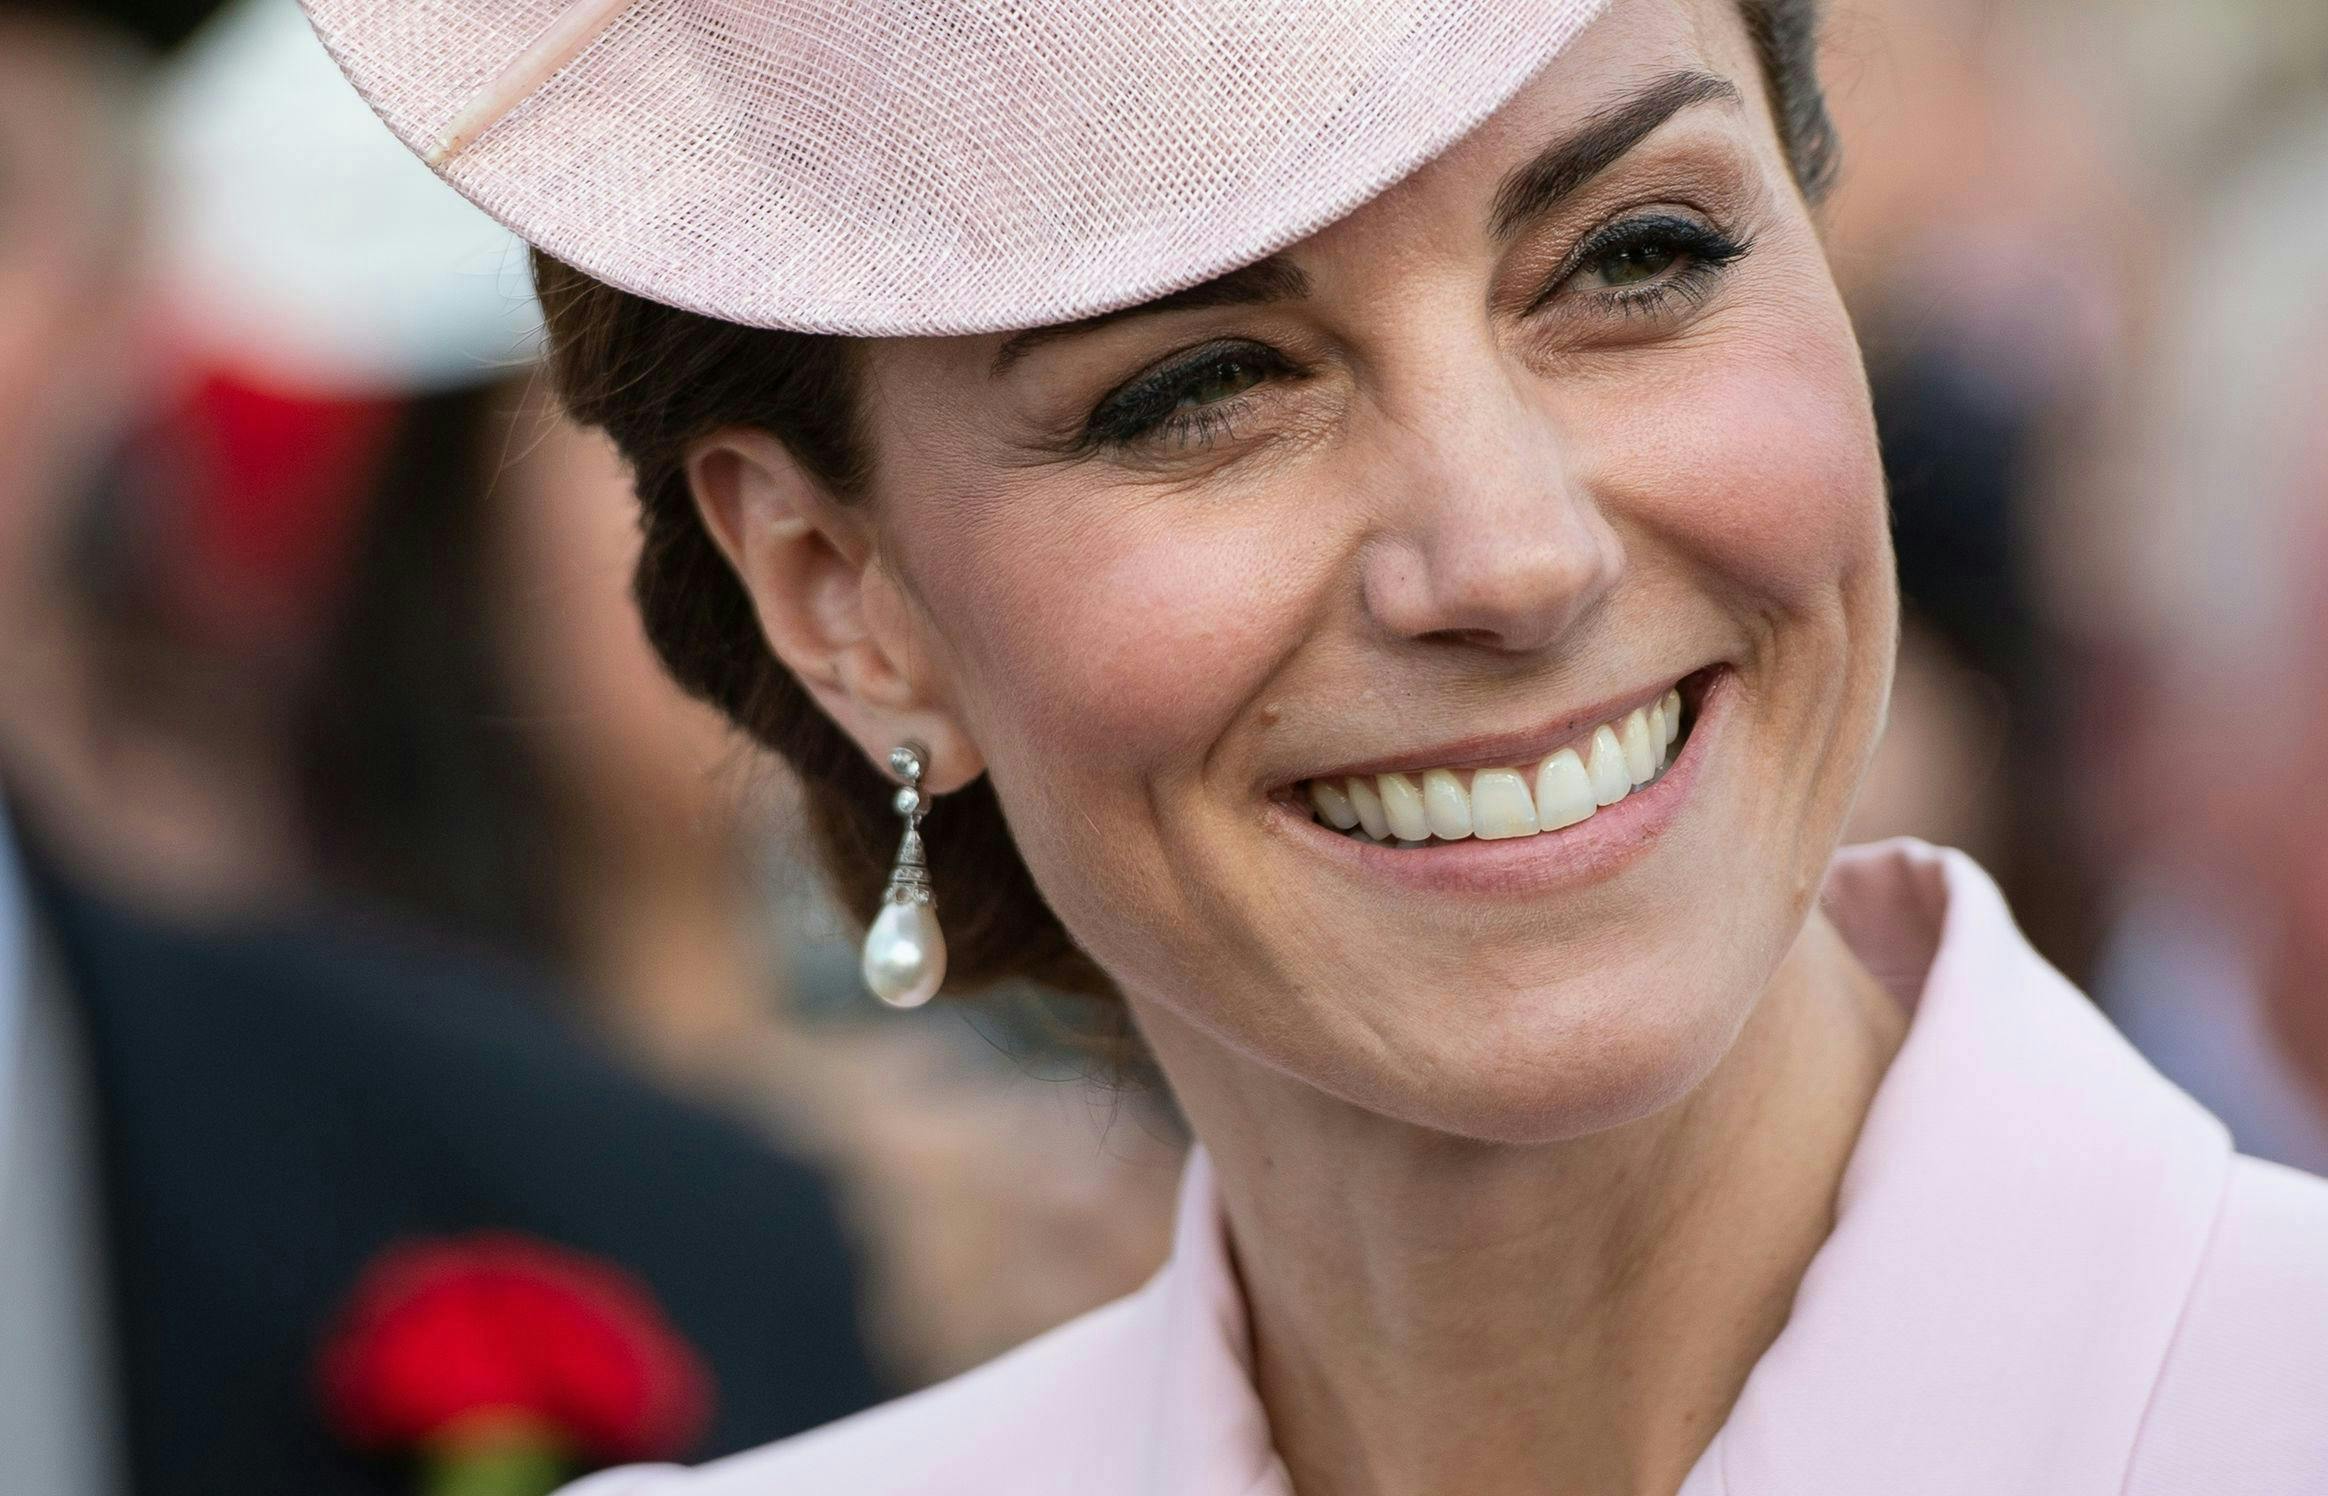 wparota royal royalty idsok london england clothing apparel hat person human face dimples